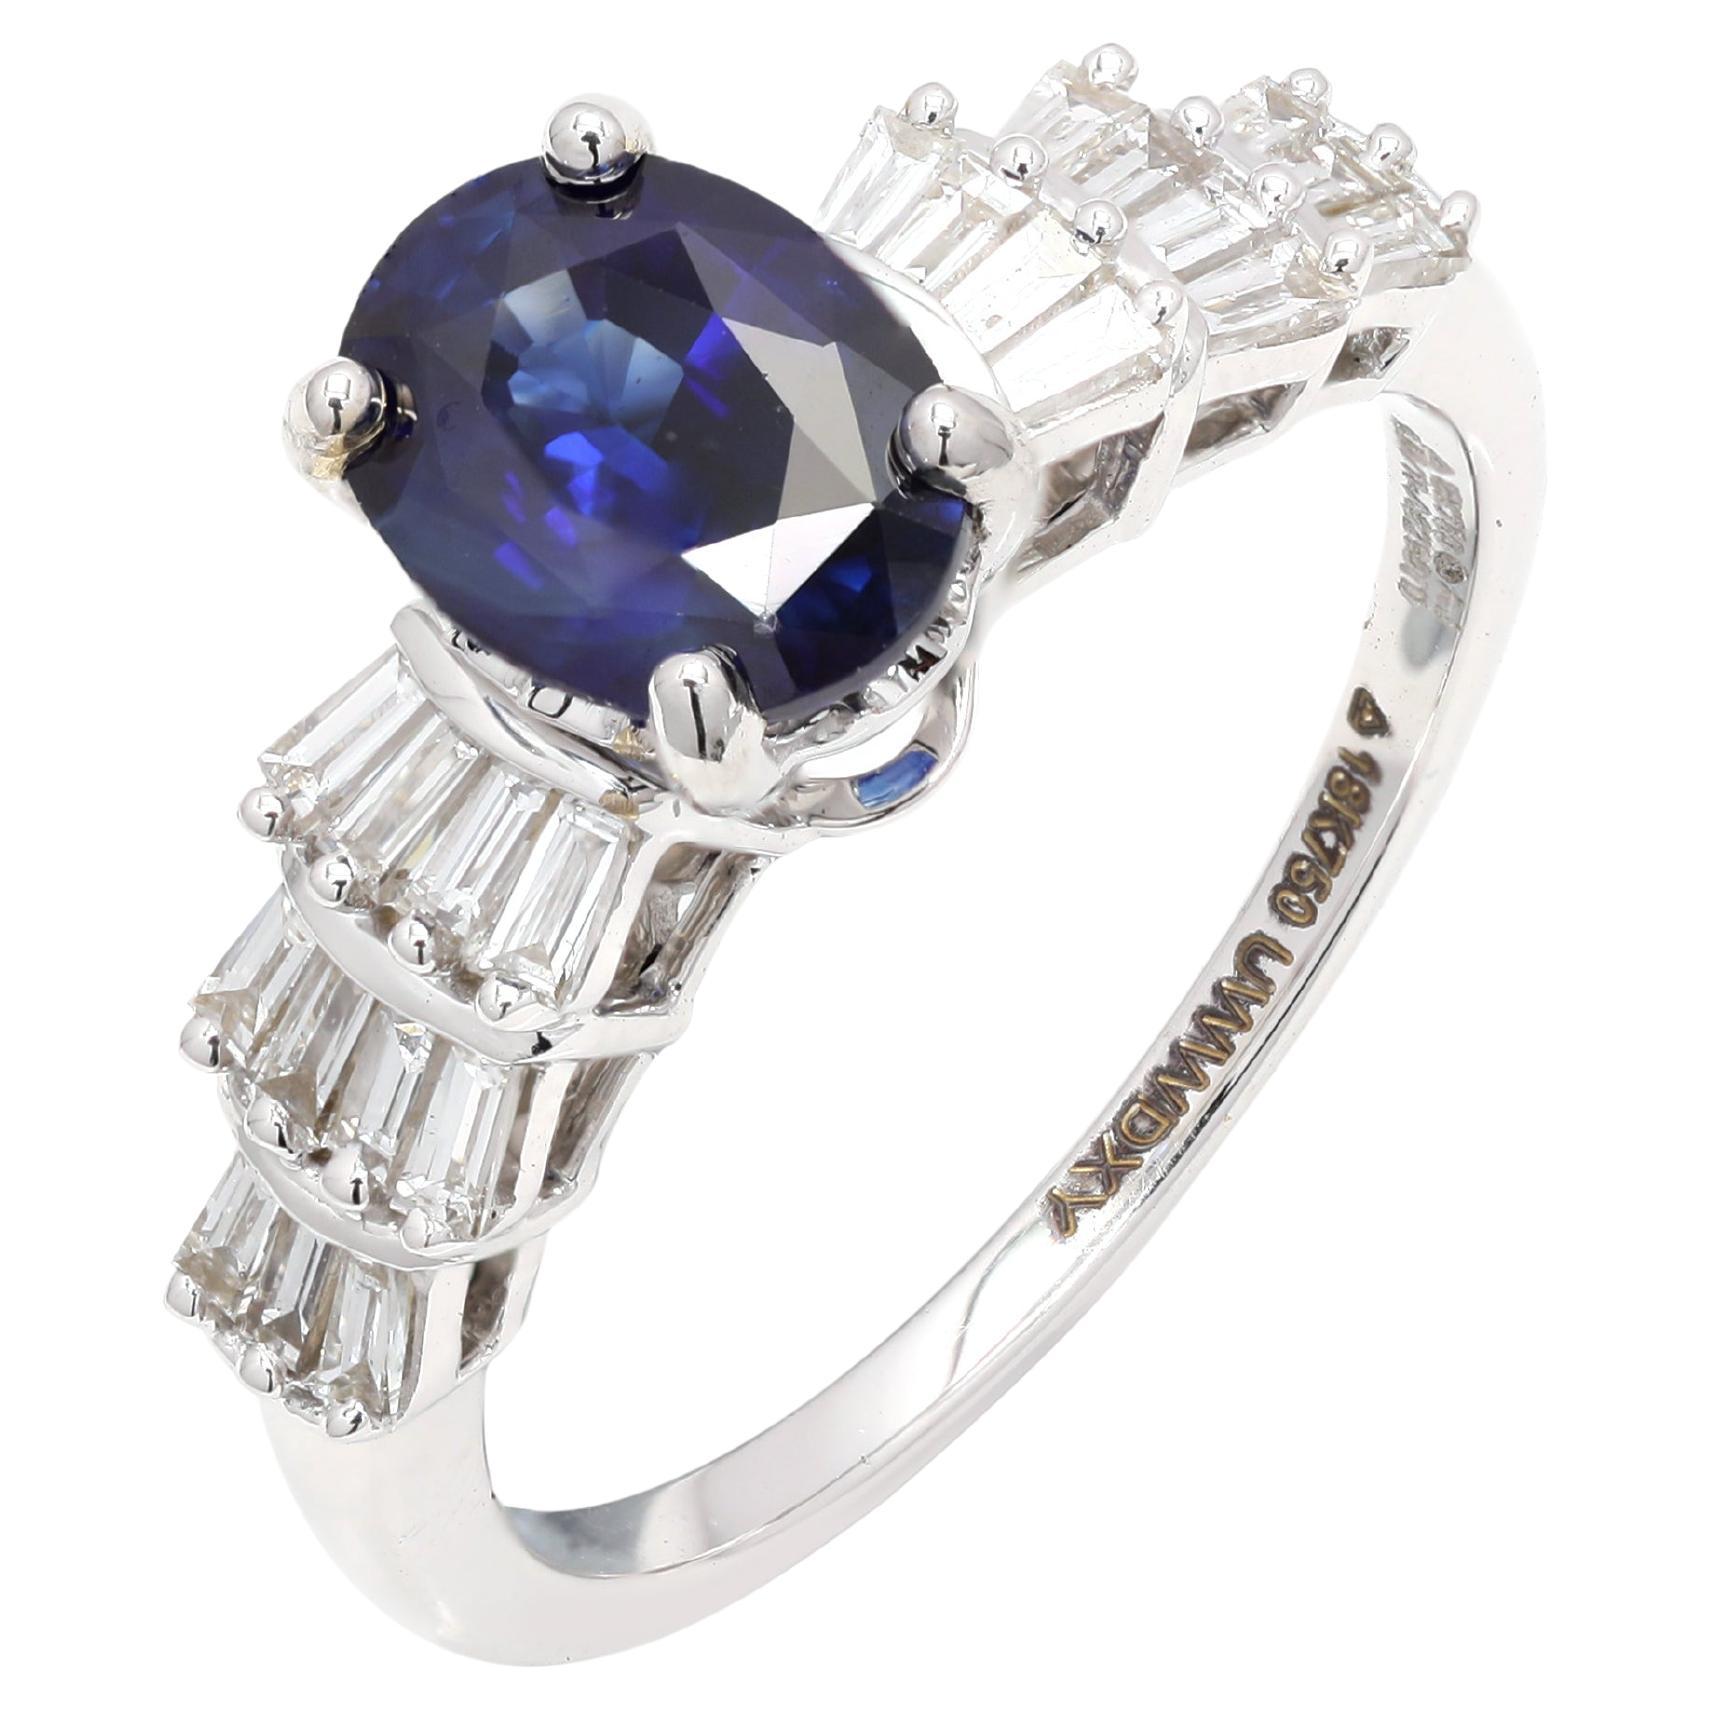 For Sale:  Elegant Blue Sapphire and Diamond Baguette Wedding Ring in 18k White Gold